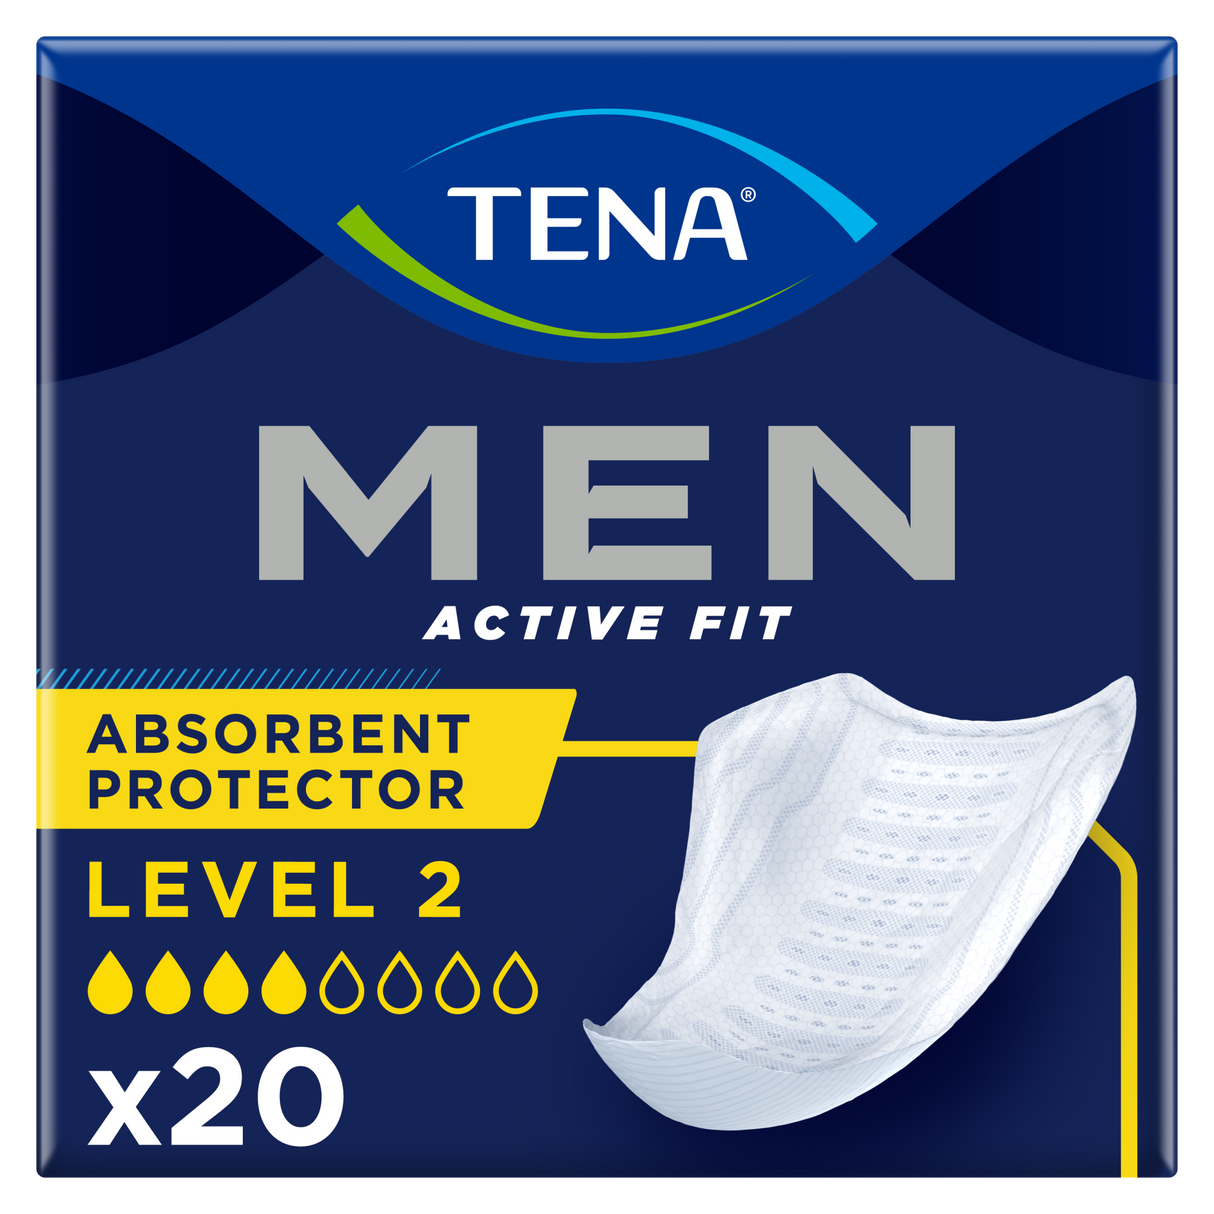 TENA Men Medium niveau 2 - protection homme